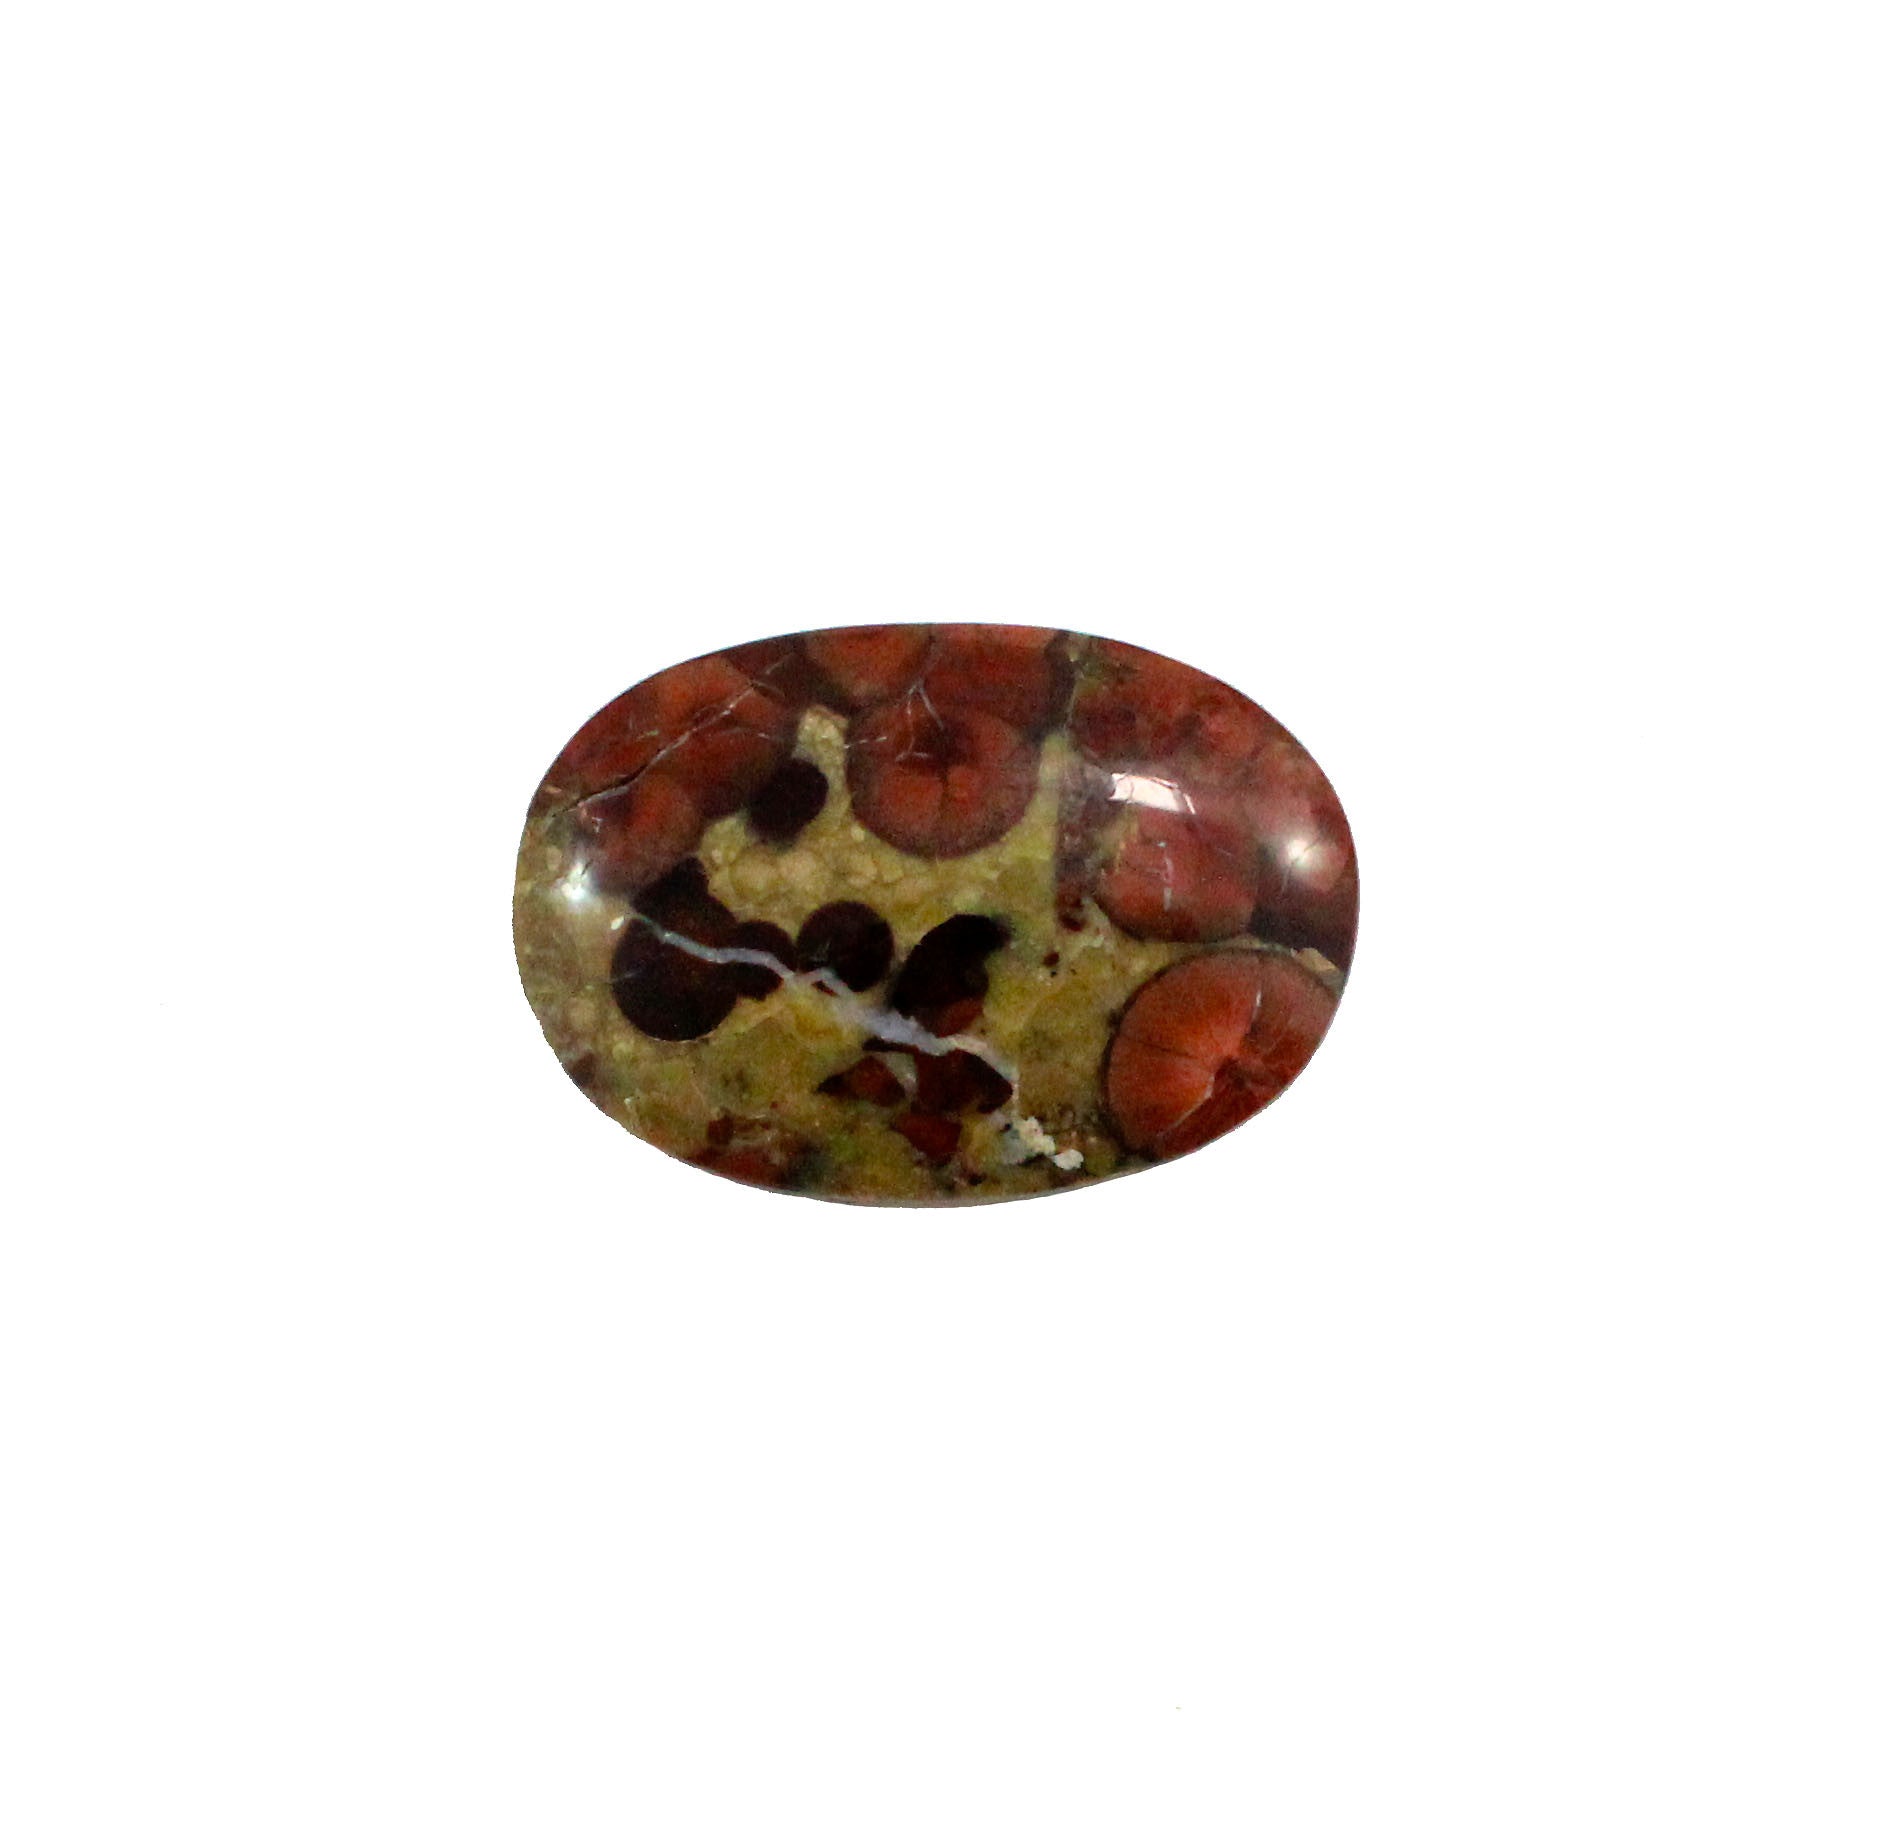 Peanut Rock 36x25mm oval cut cabochon - Make your own custom jewelry - Sarah Hughes - 6